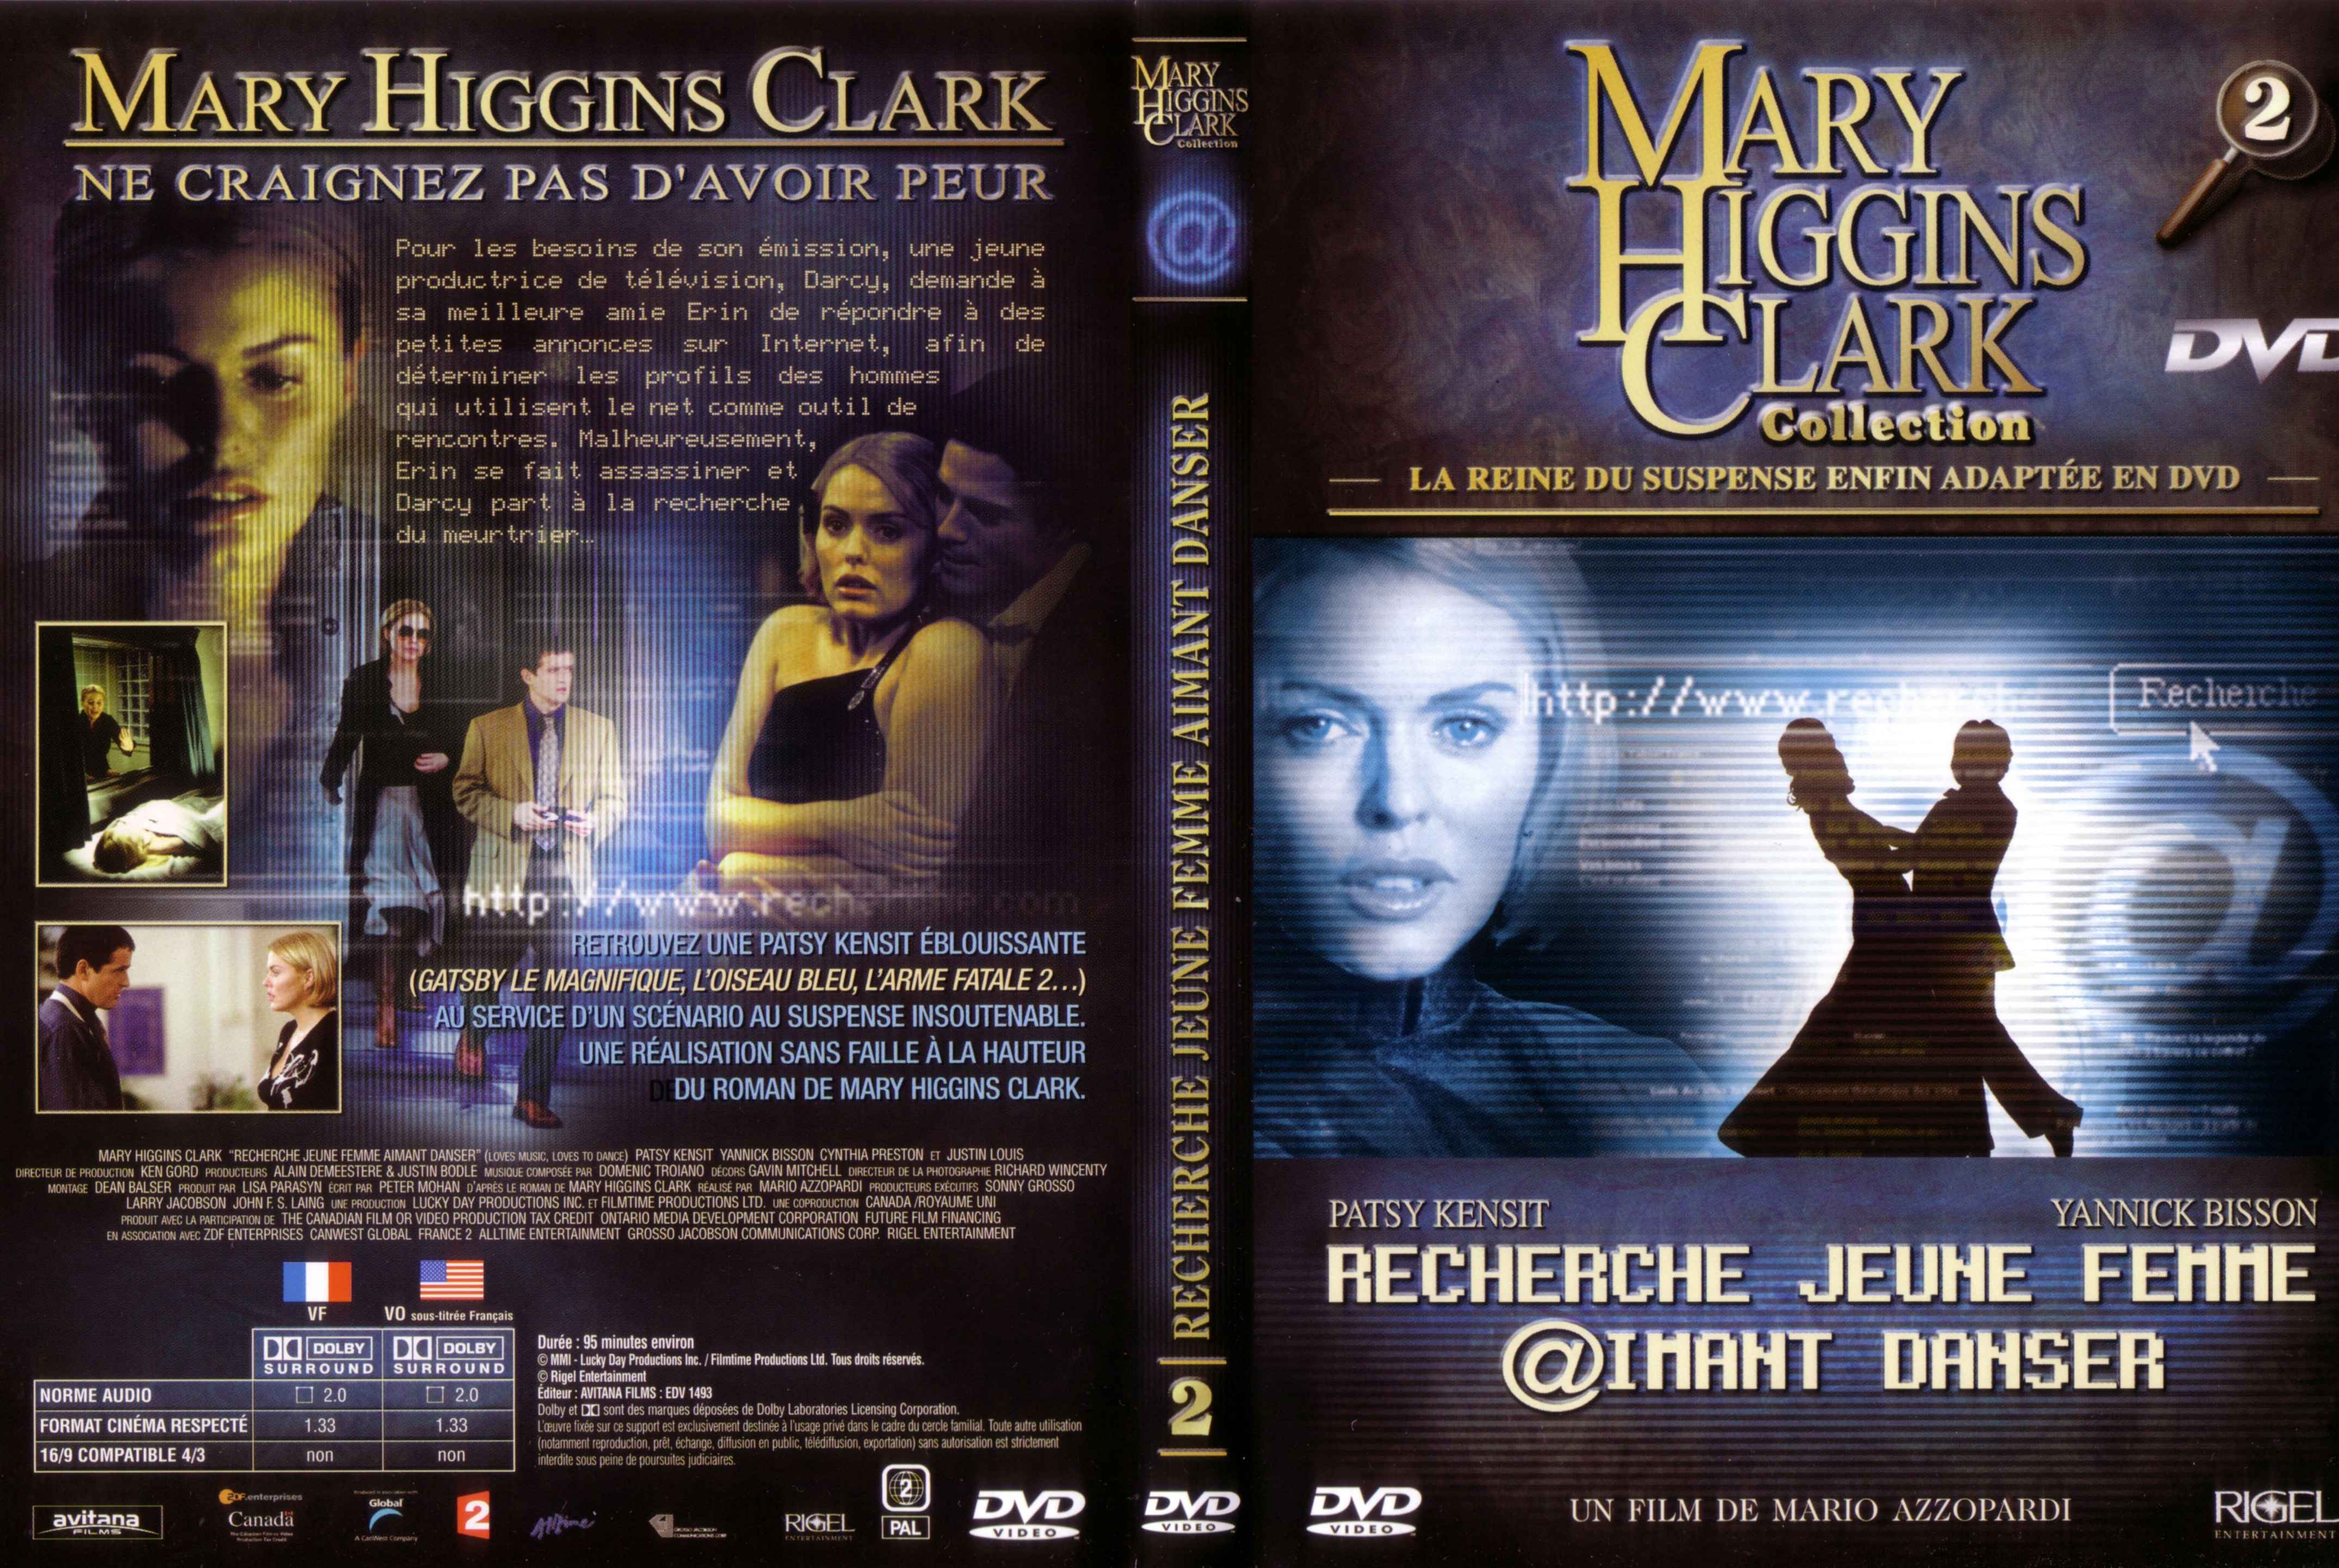 Jaquette DVD Mary Higgins Clark vol 02 - recherche jeune femme @imant danser